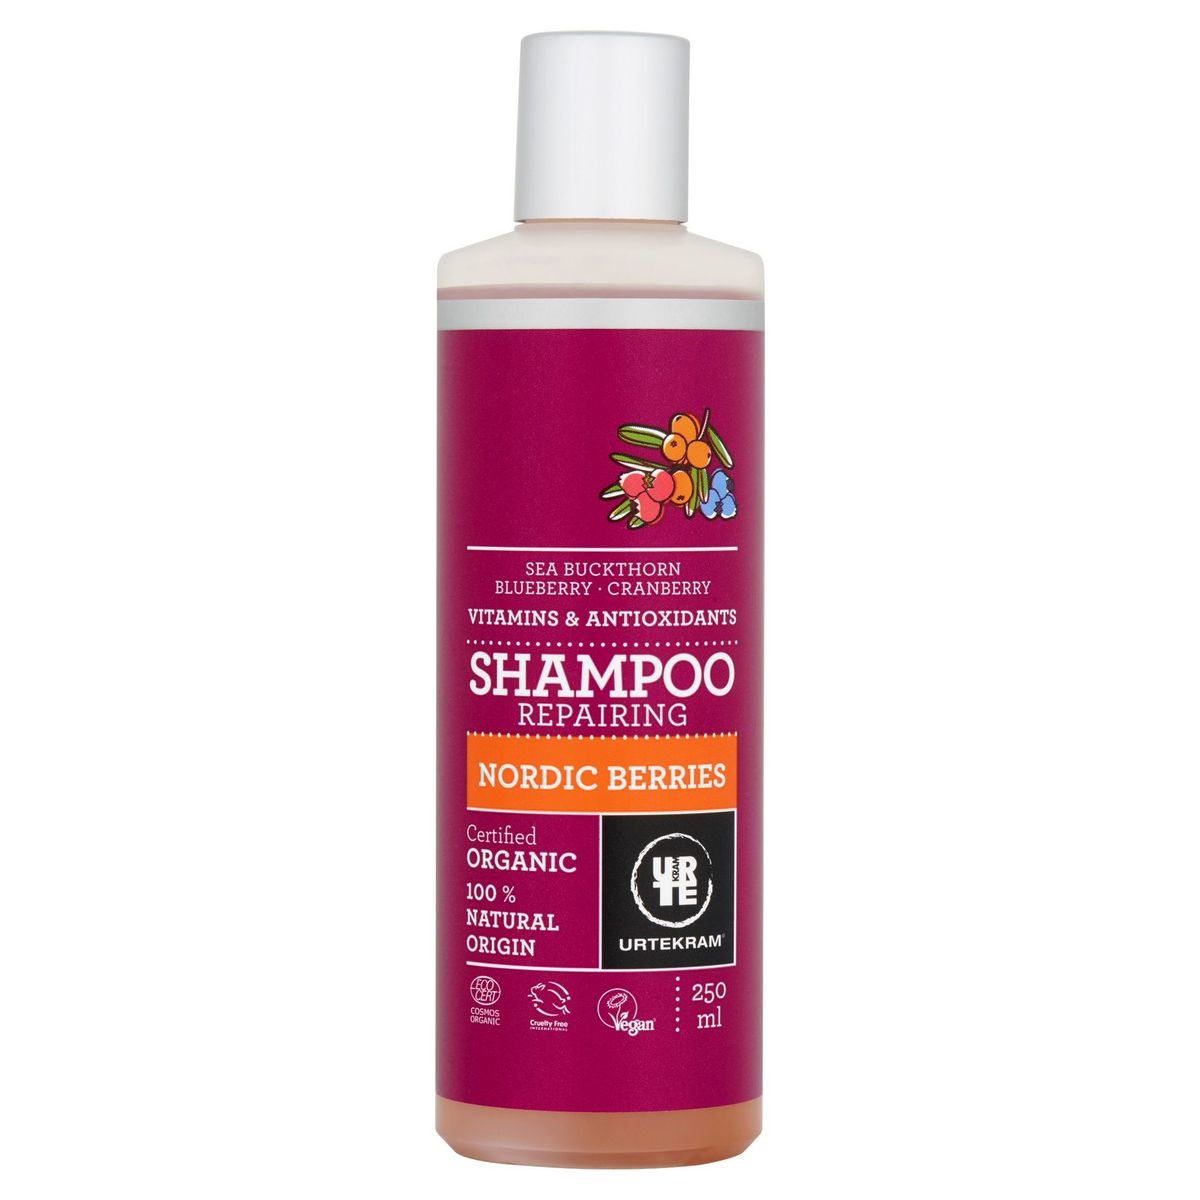 Urtekram Shampoo Repairing Nordic Berries 250 ml